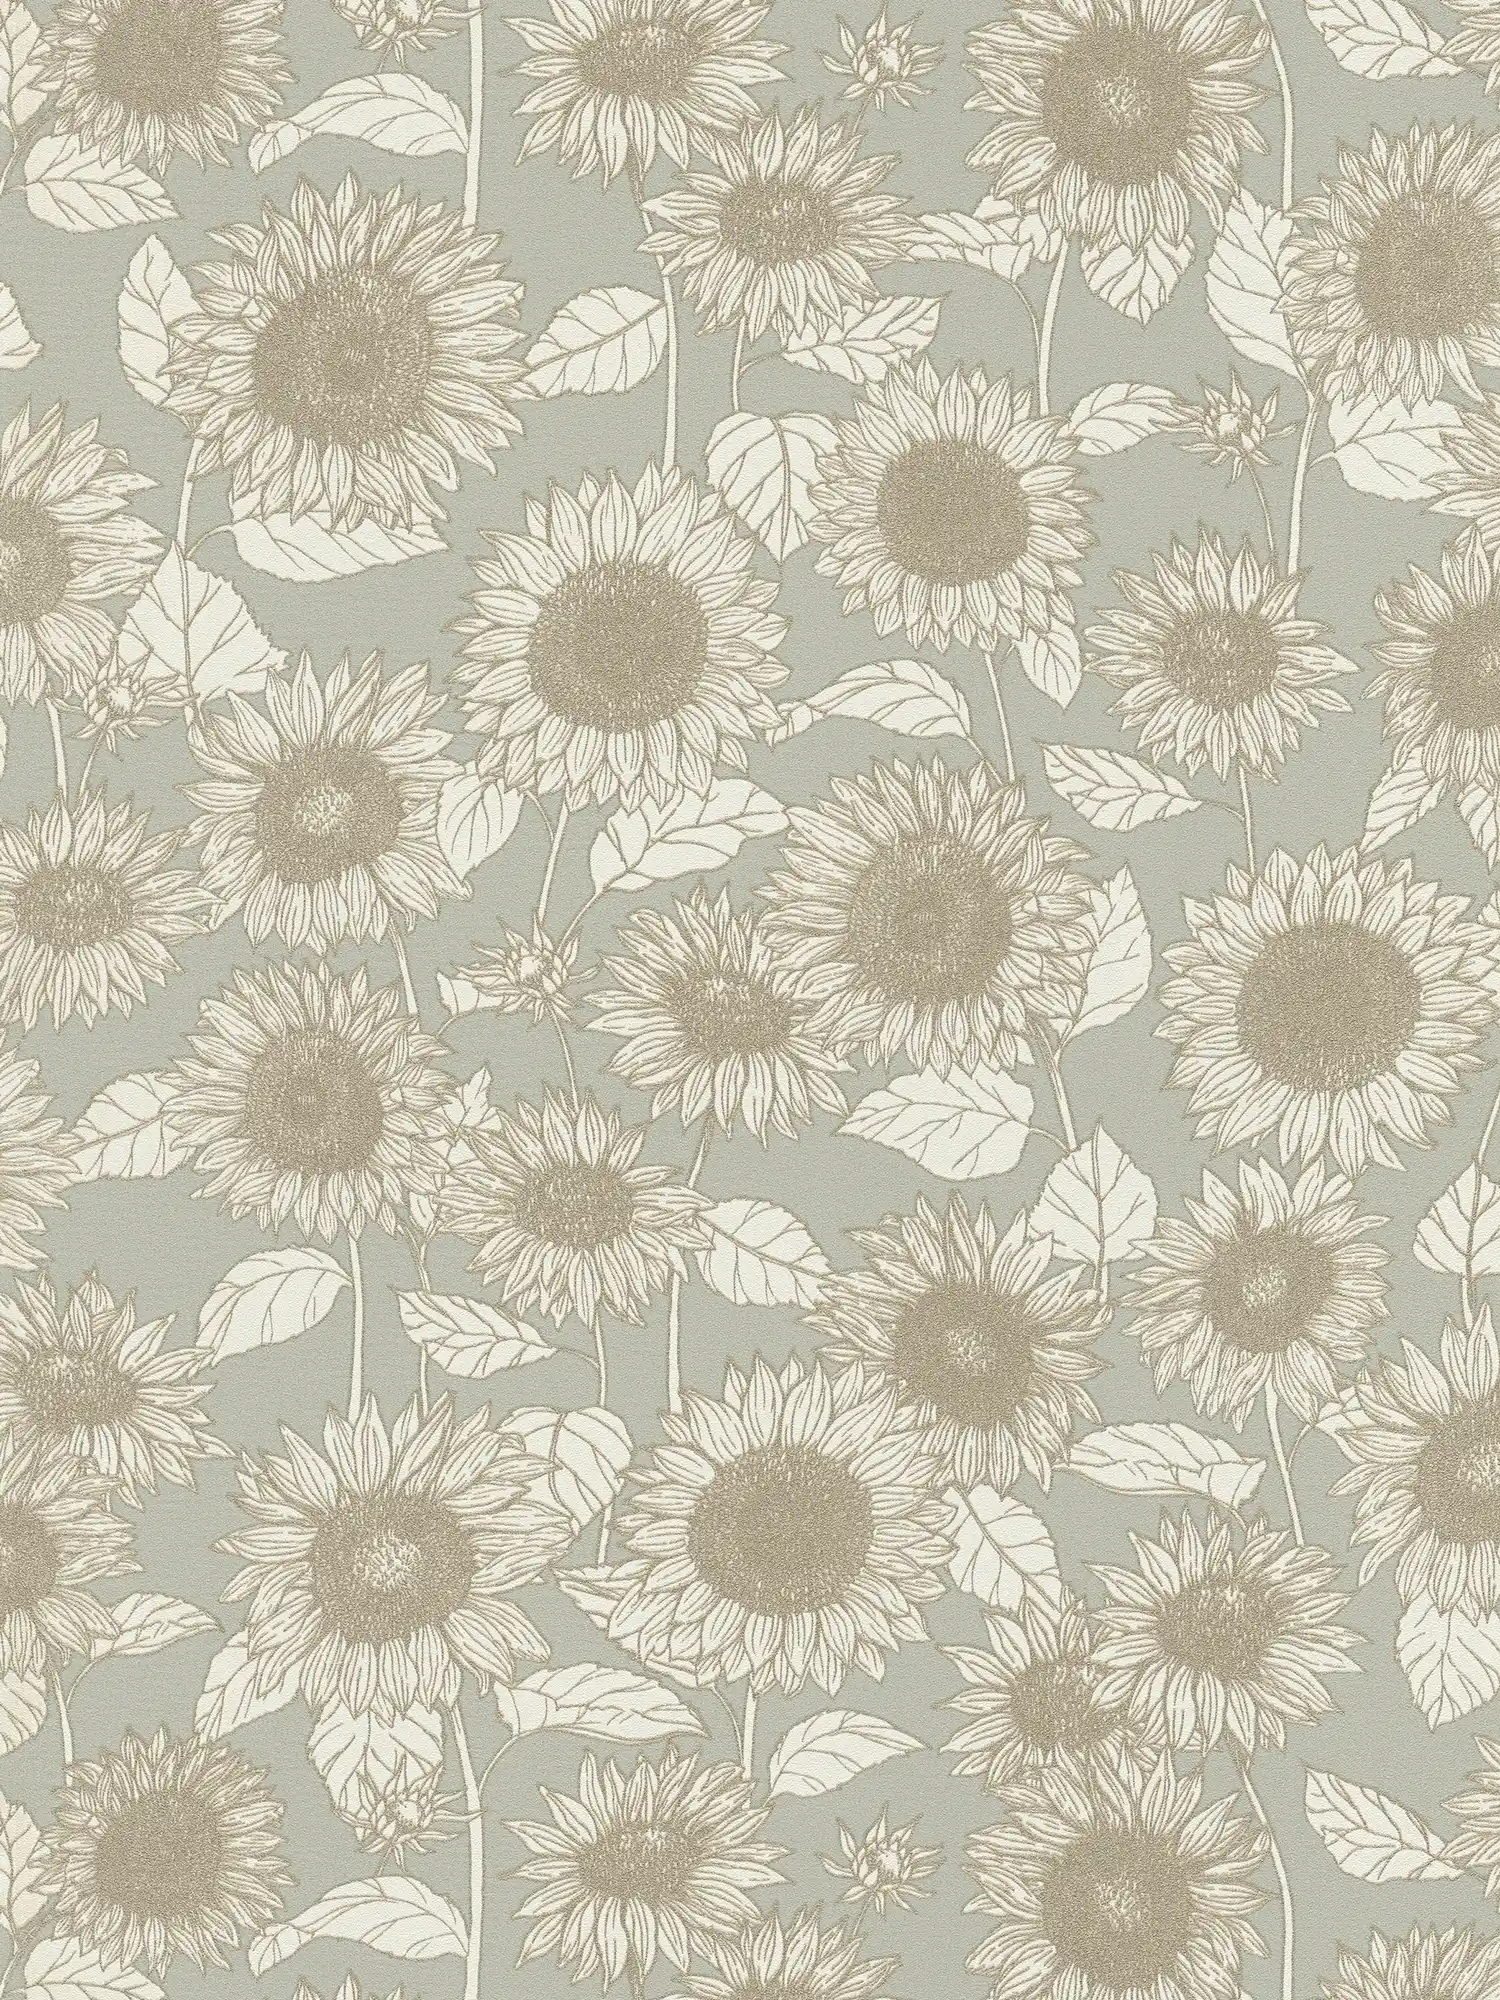 Sonnenblumen Tapete Metallic-Effekt – Beige, Grau, Creme
